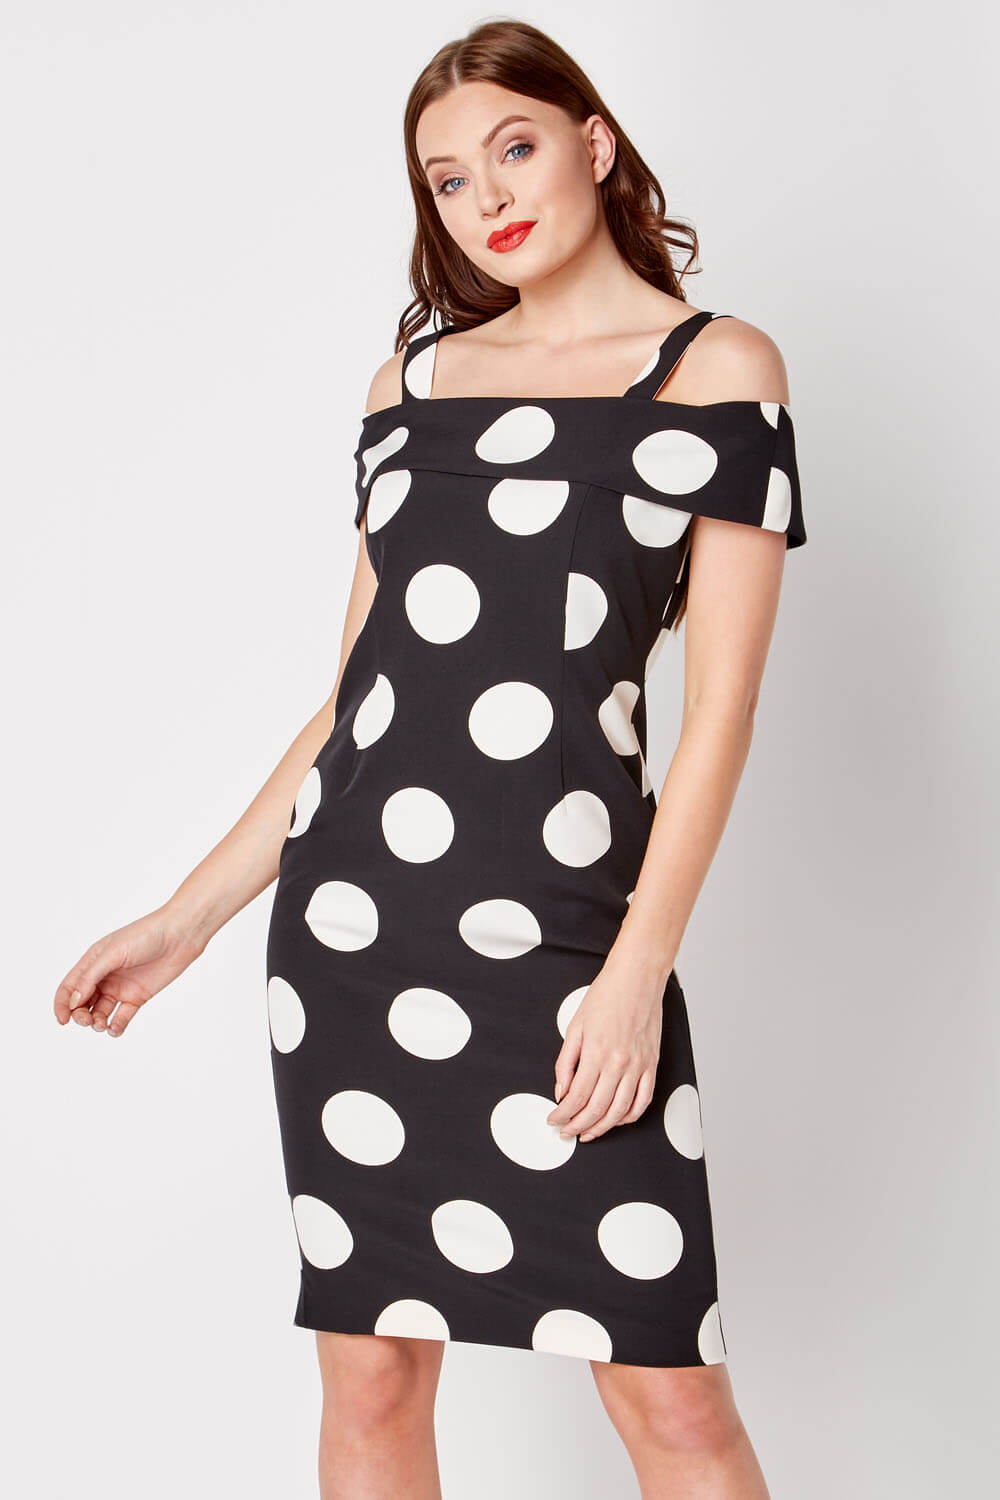 Black Polka Dot Bardot Dress, Image 2 of 6